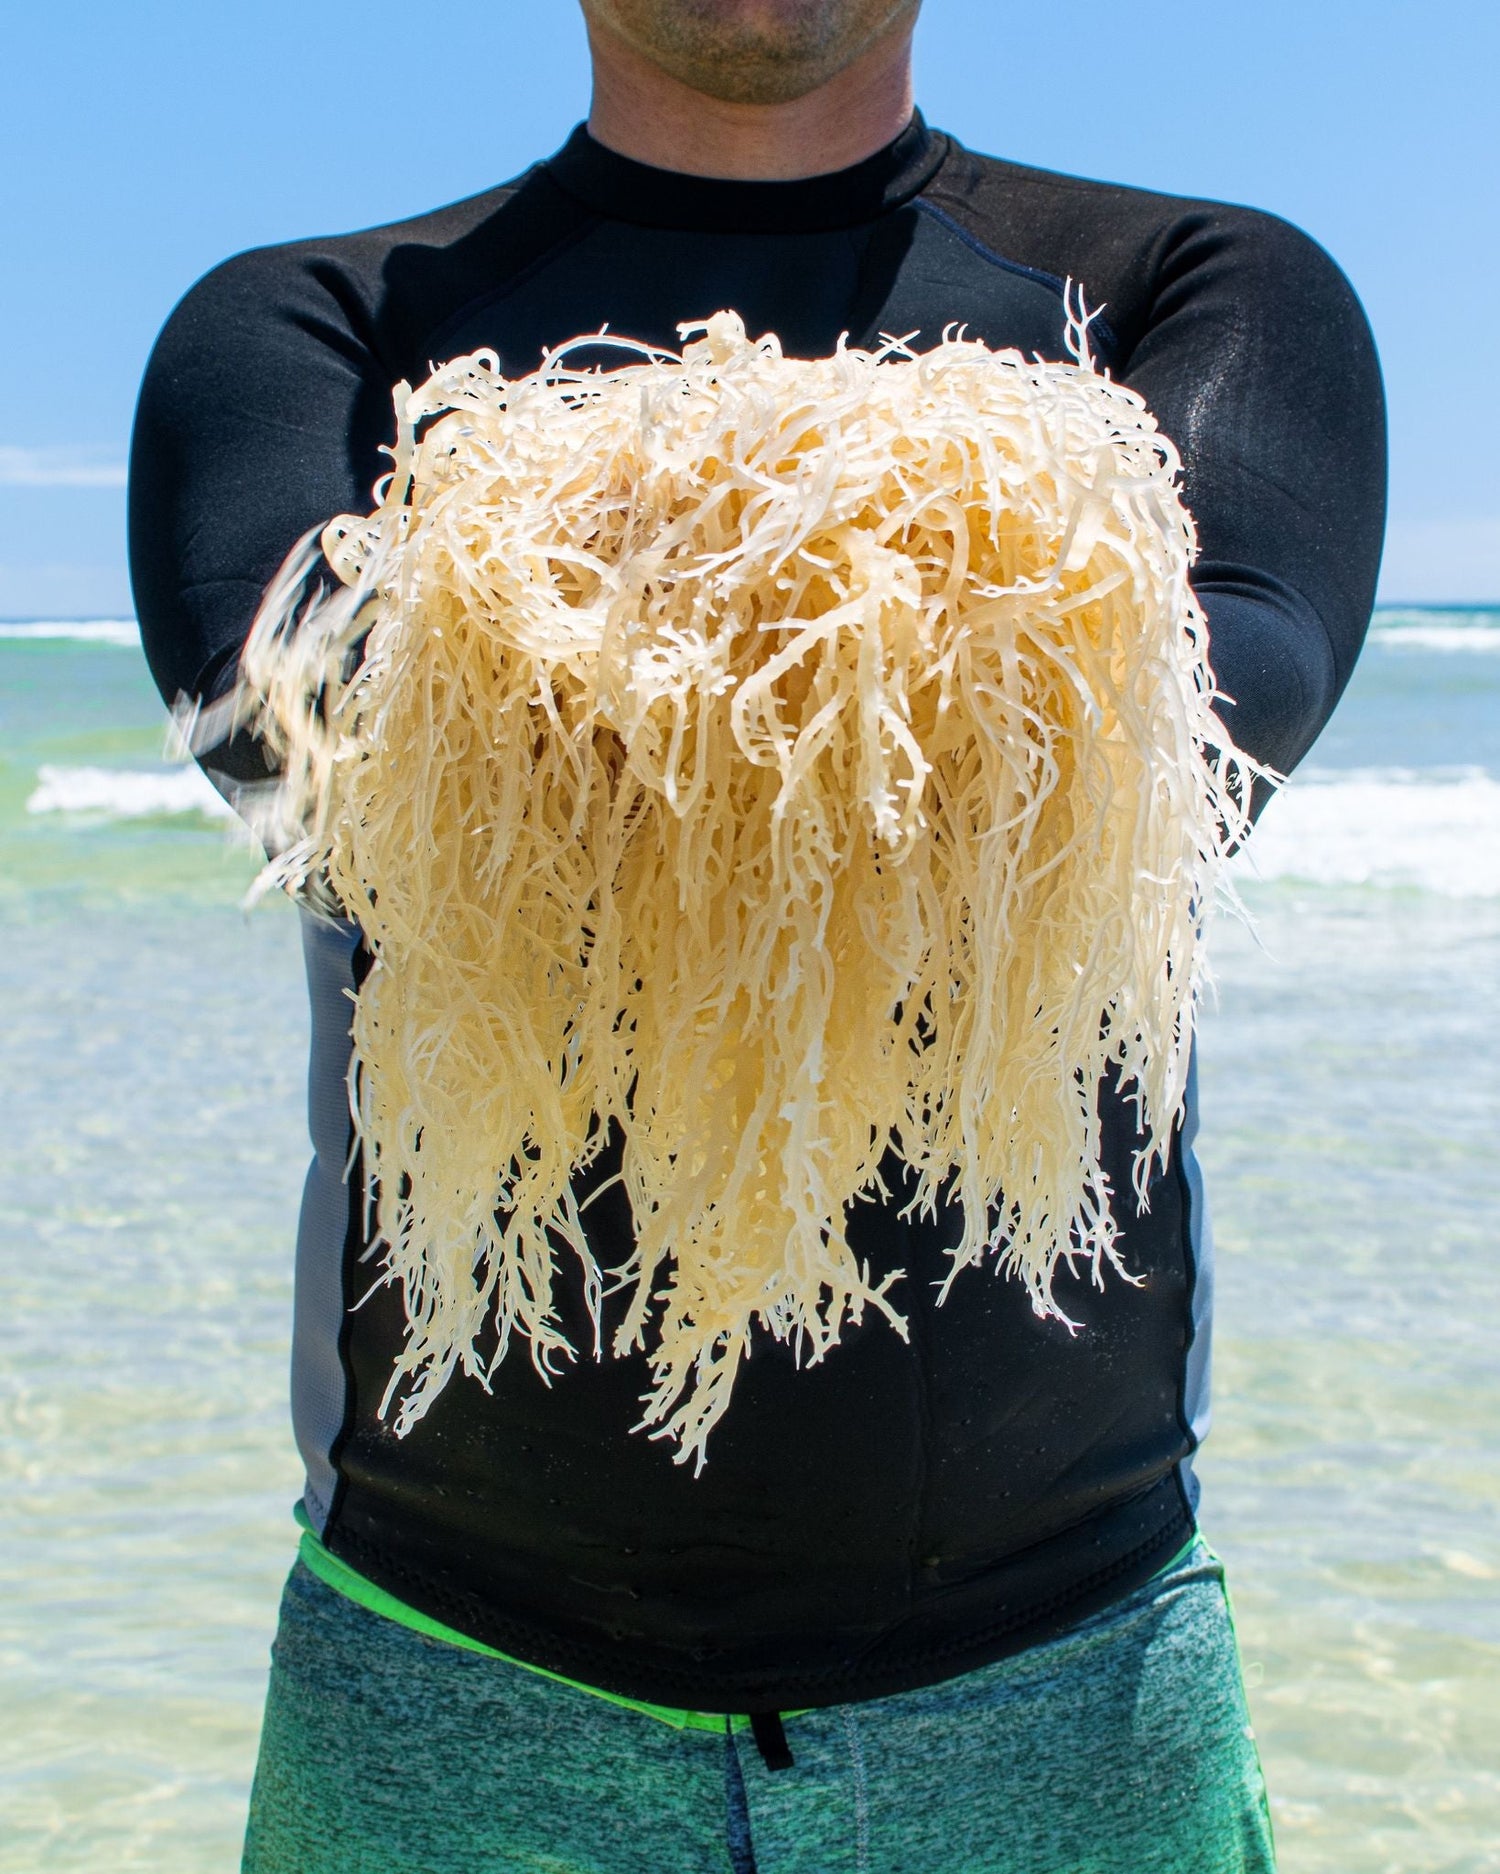 Top Sea Moss Benefits: Boost Health & Vitality Naturally